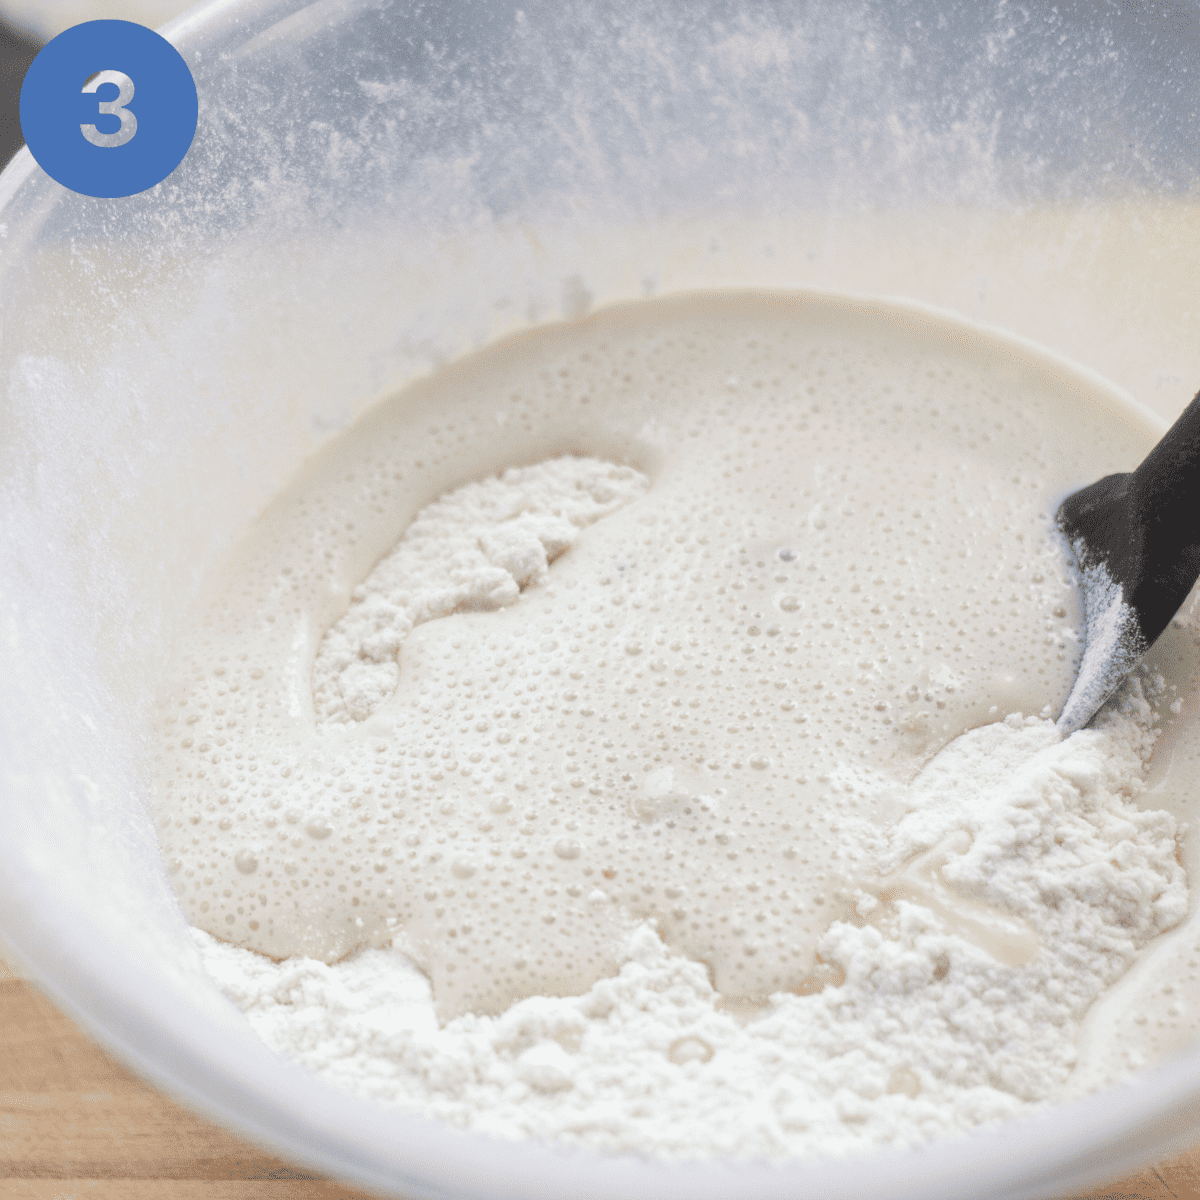 Adding yeast to flour.